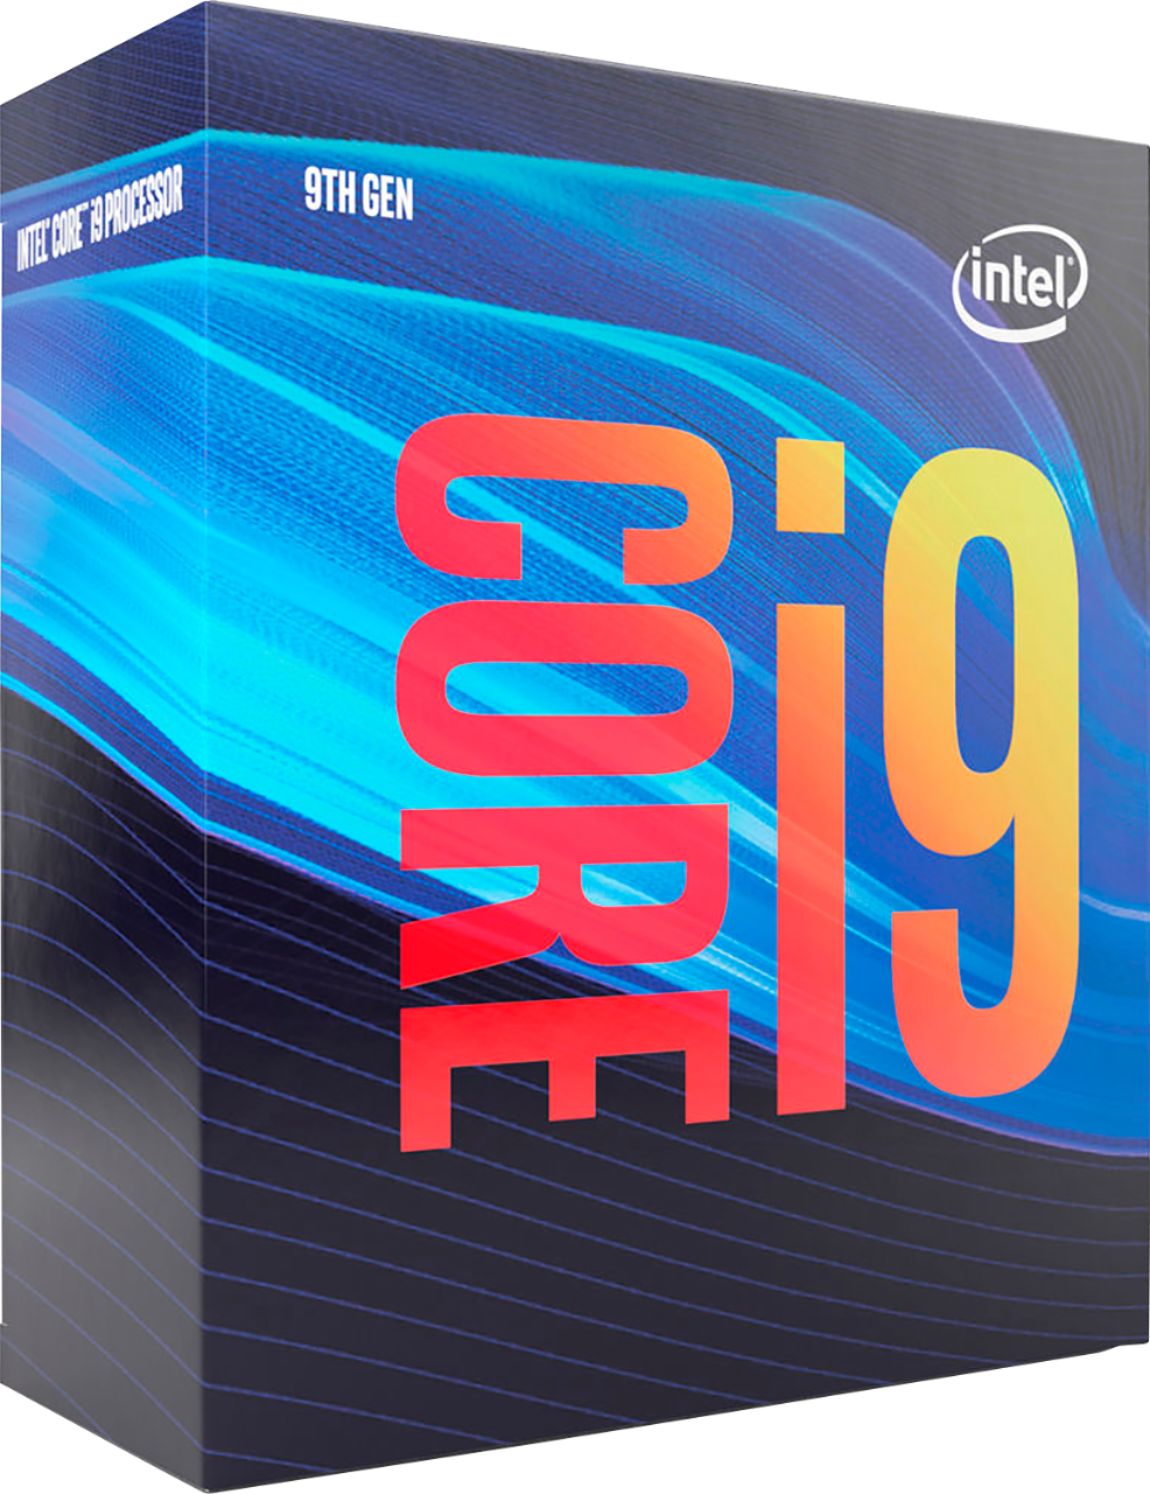 Customer Reviews: Intel Core i9-9900 9th Generation 8-Core 16 